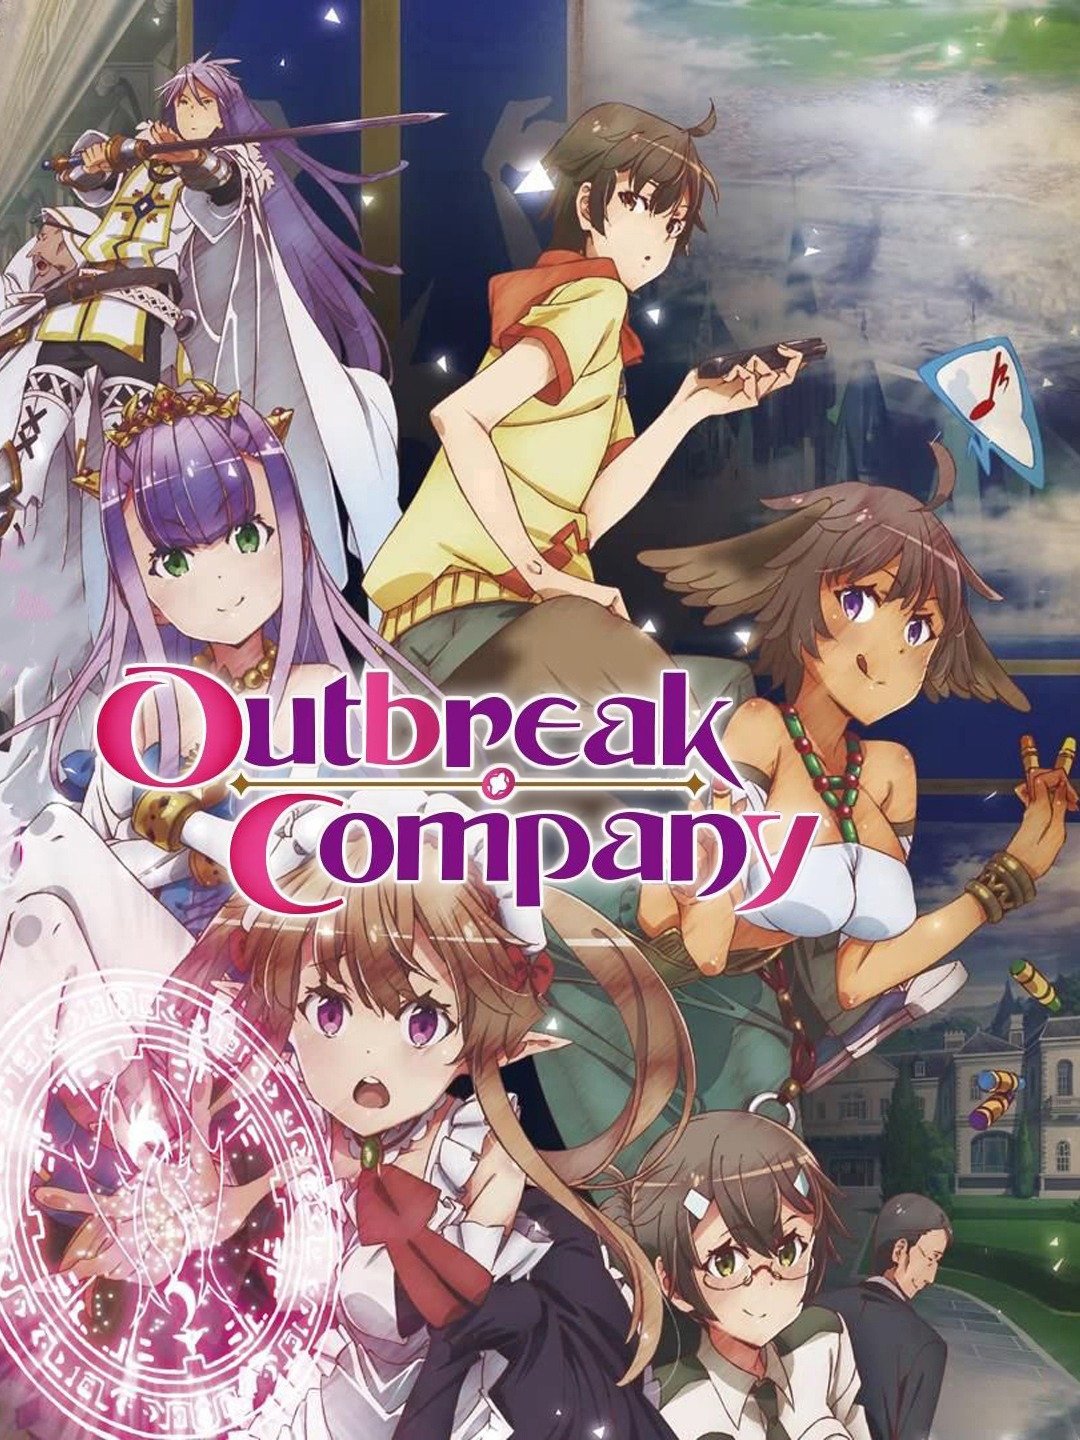 Outbreak company